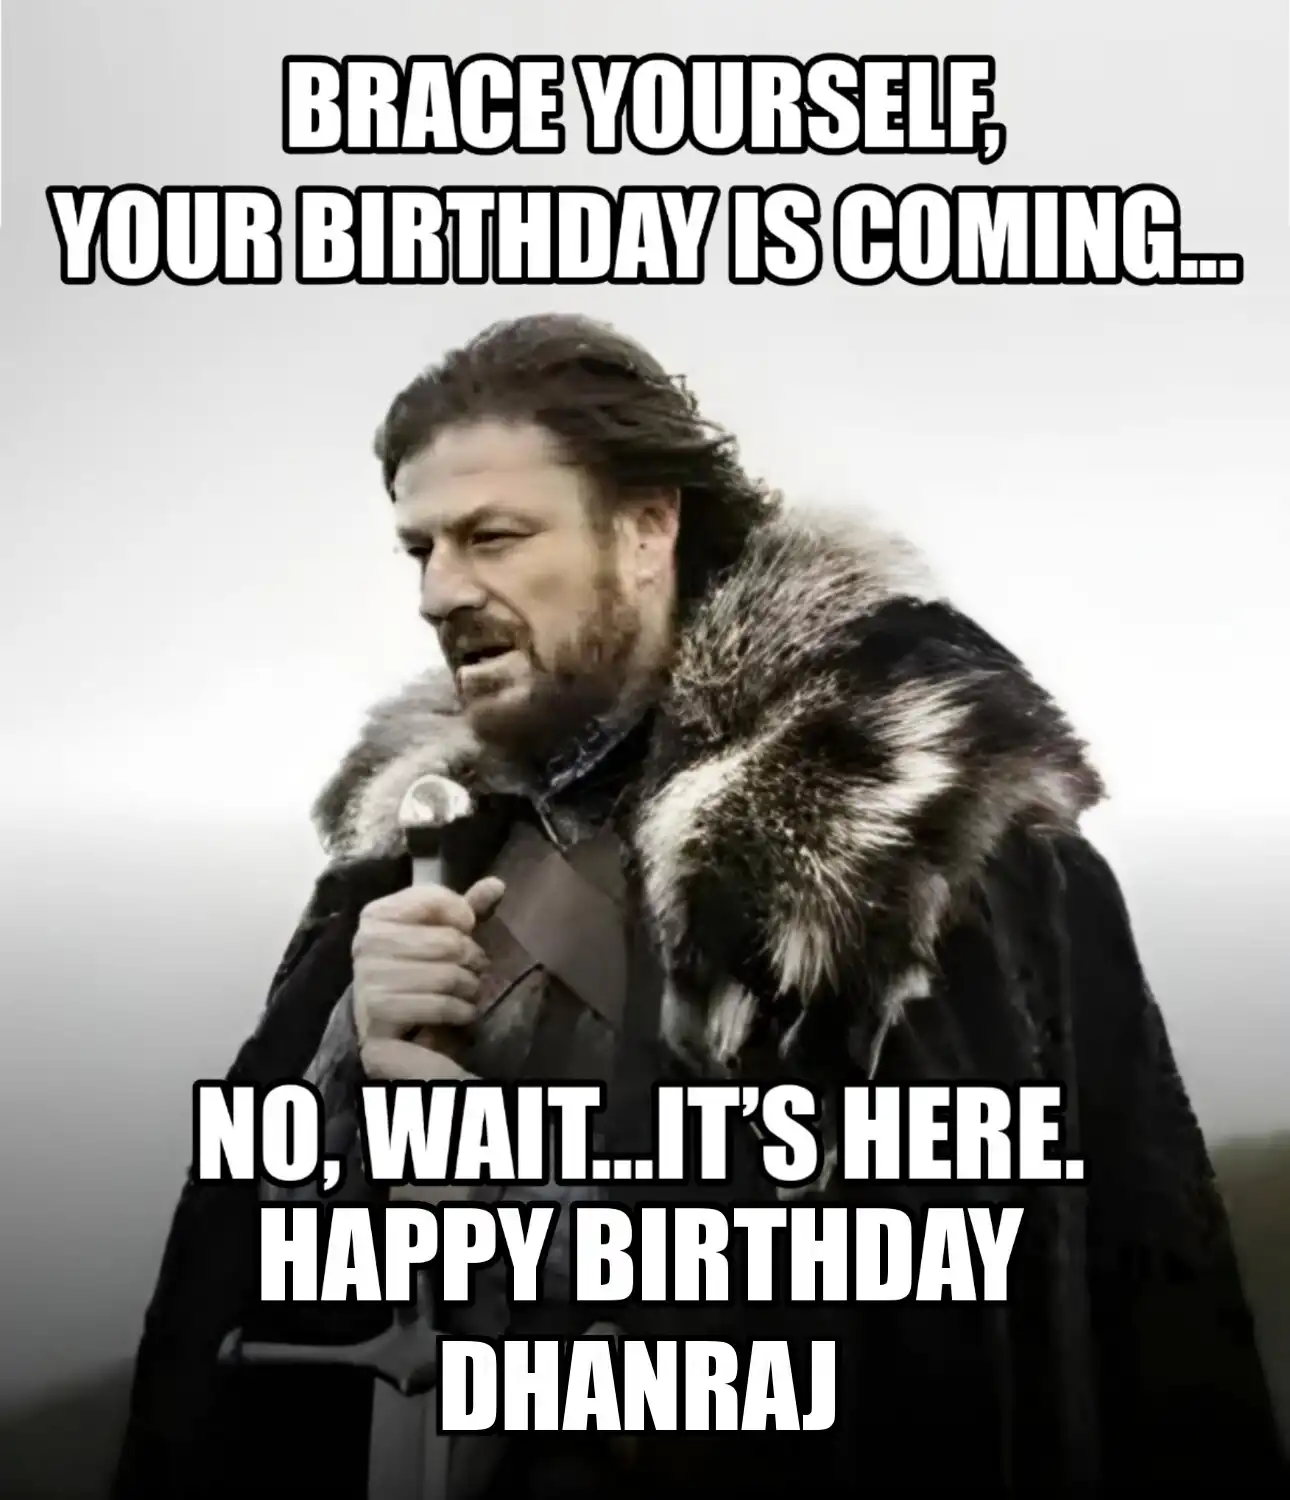 Happy Birthday Dhanraj Brace Yourself Your Birthday Is Coming Meme